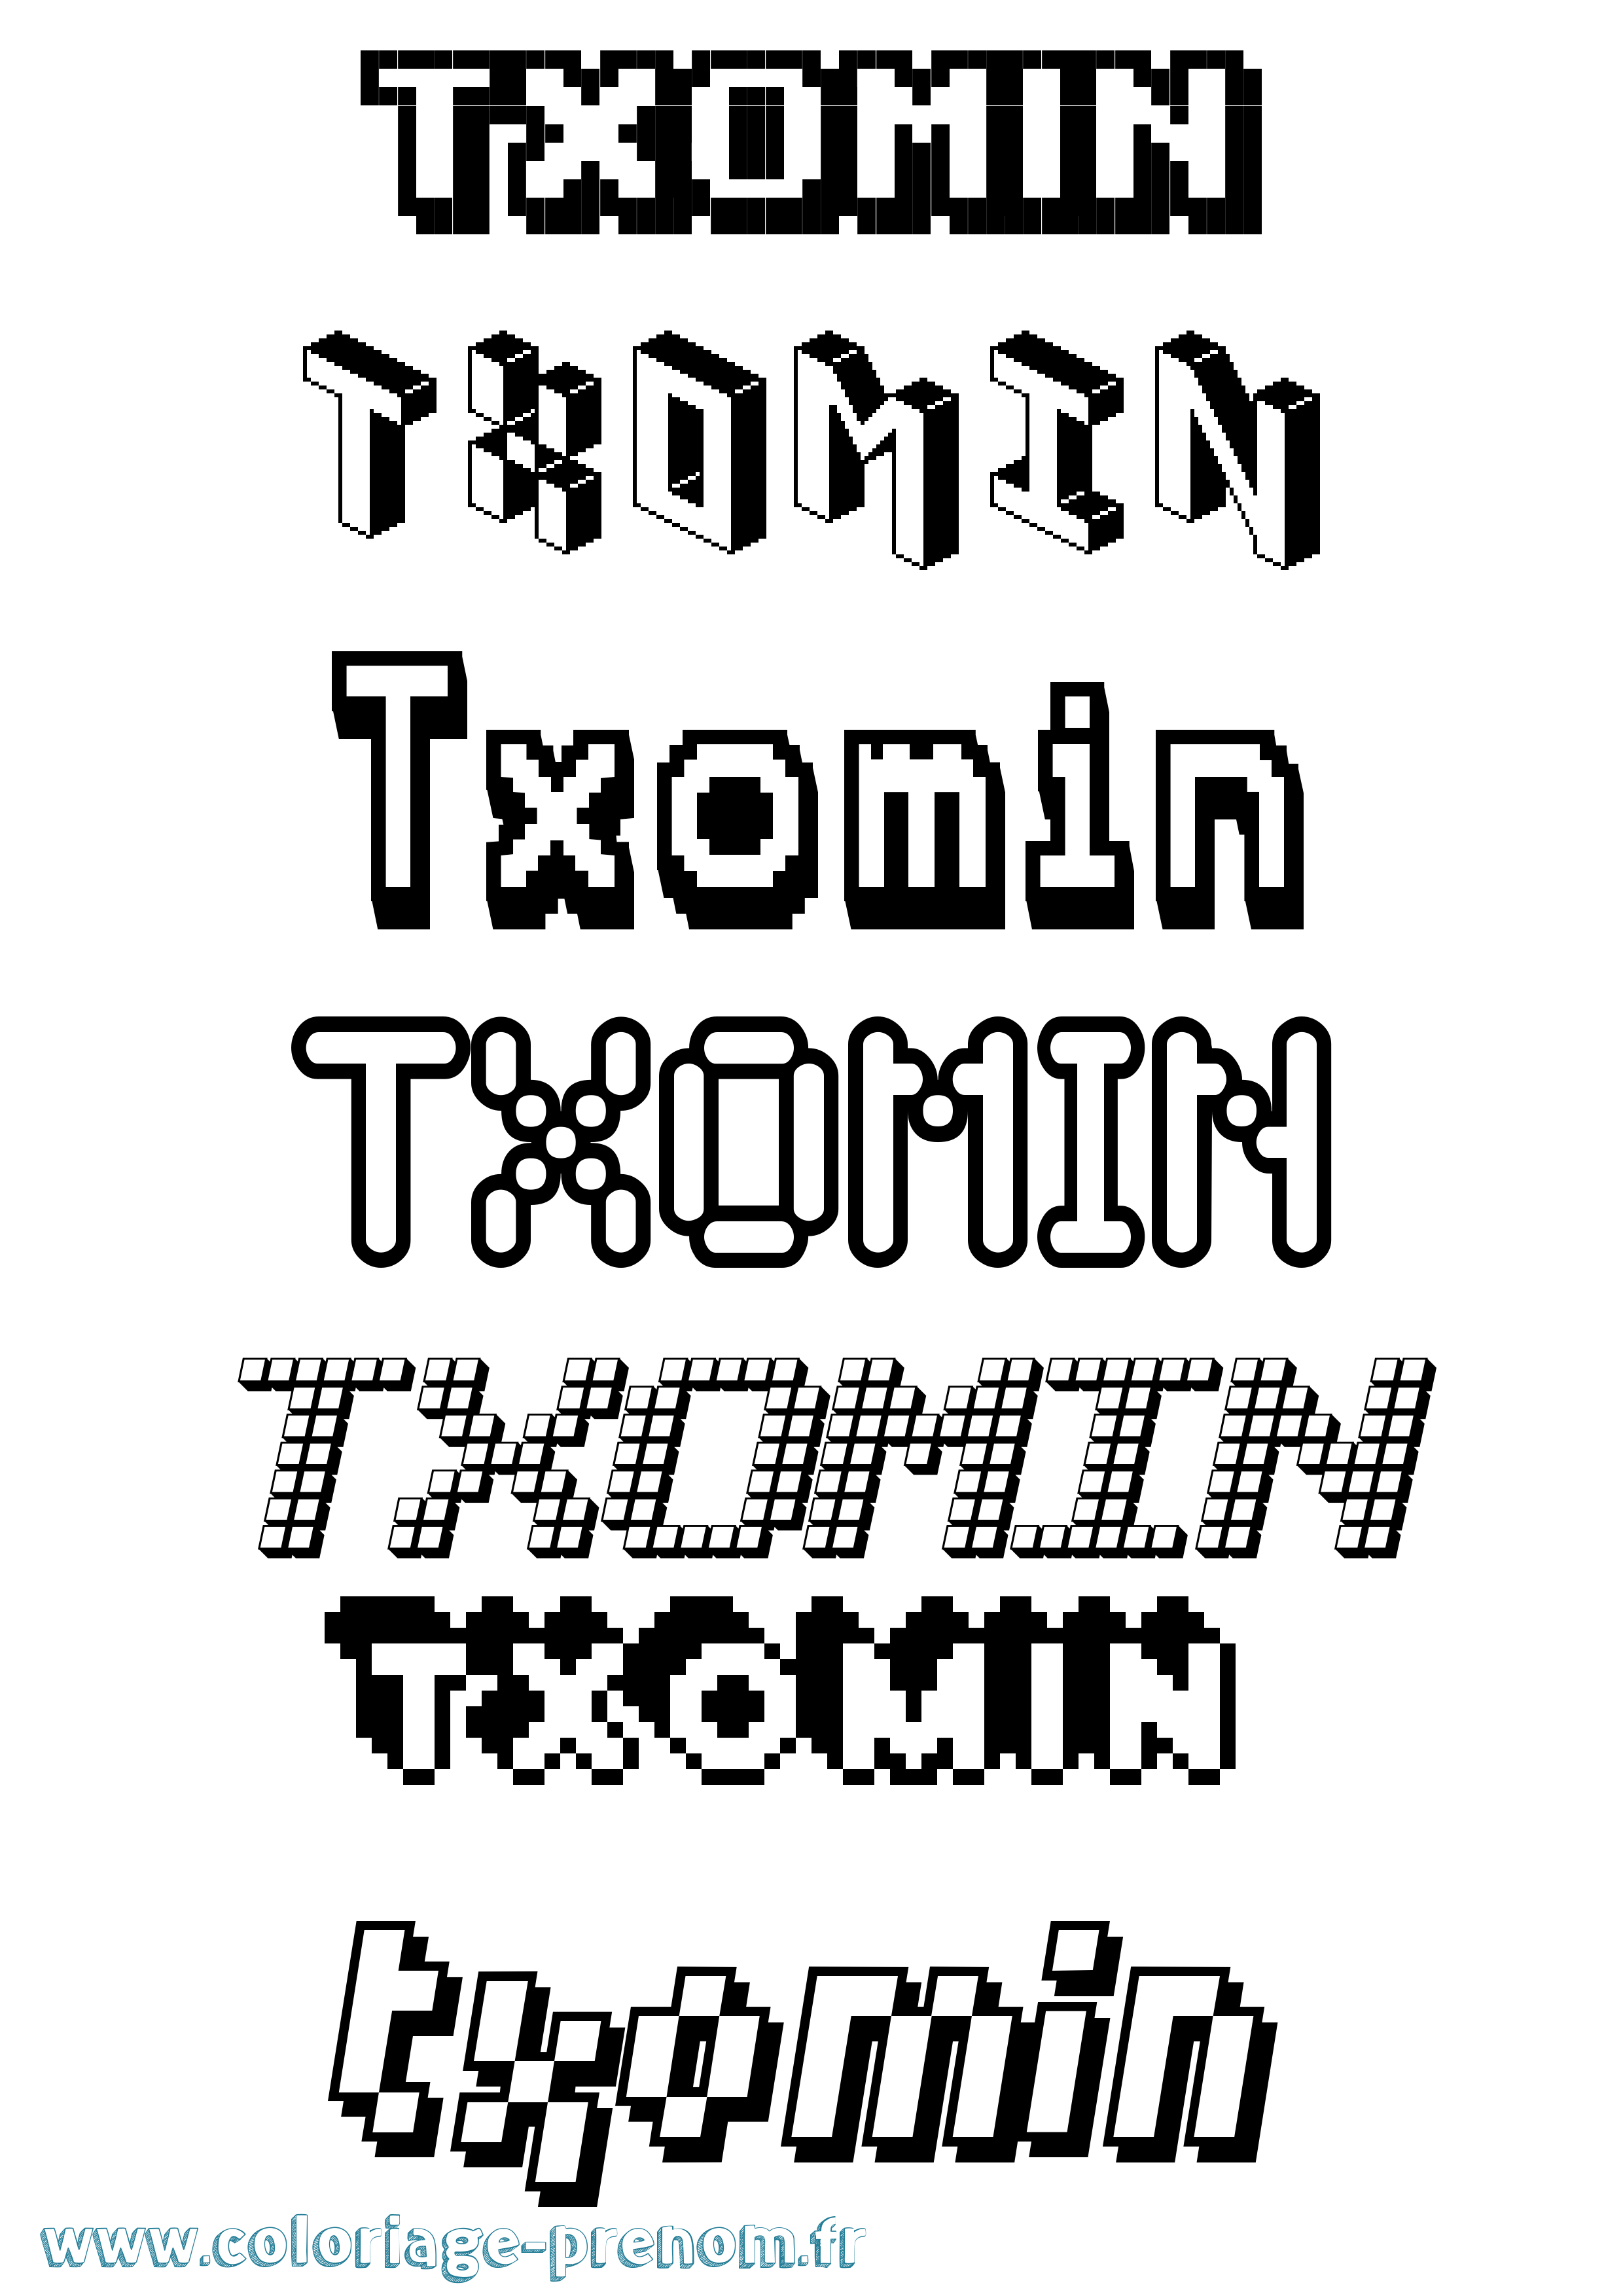 Coloriage prénom Txomin Pixel